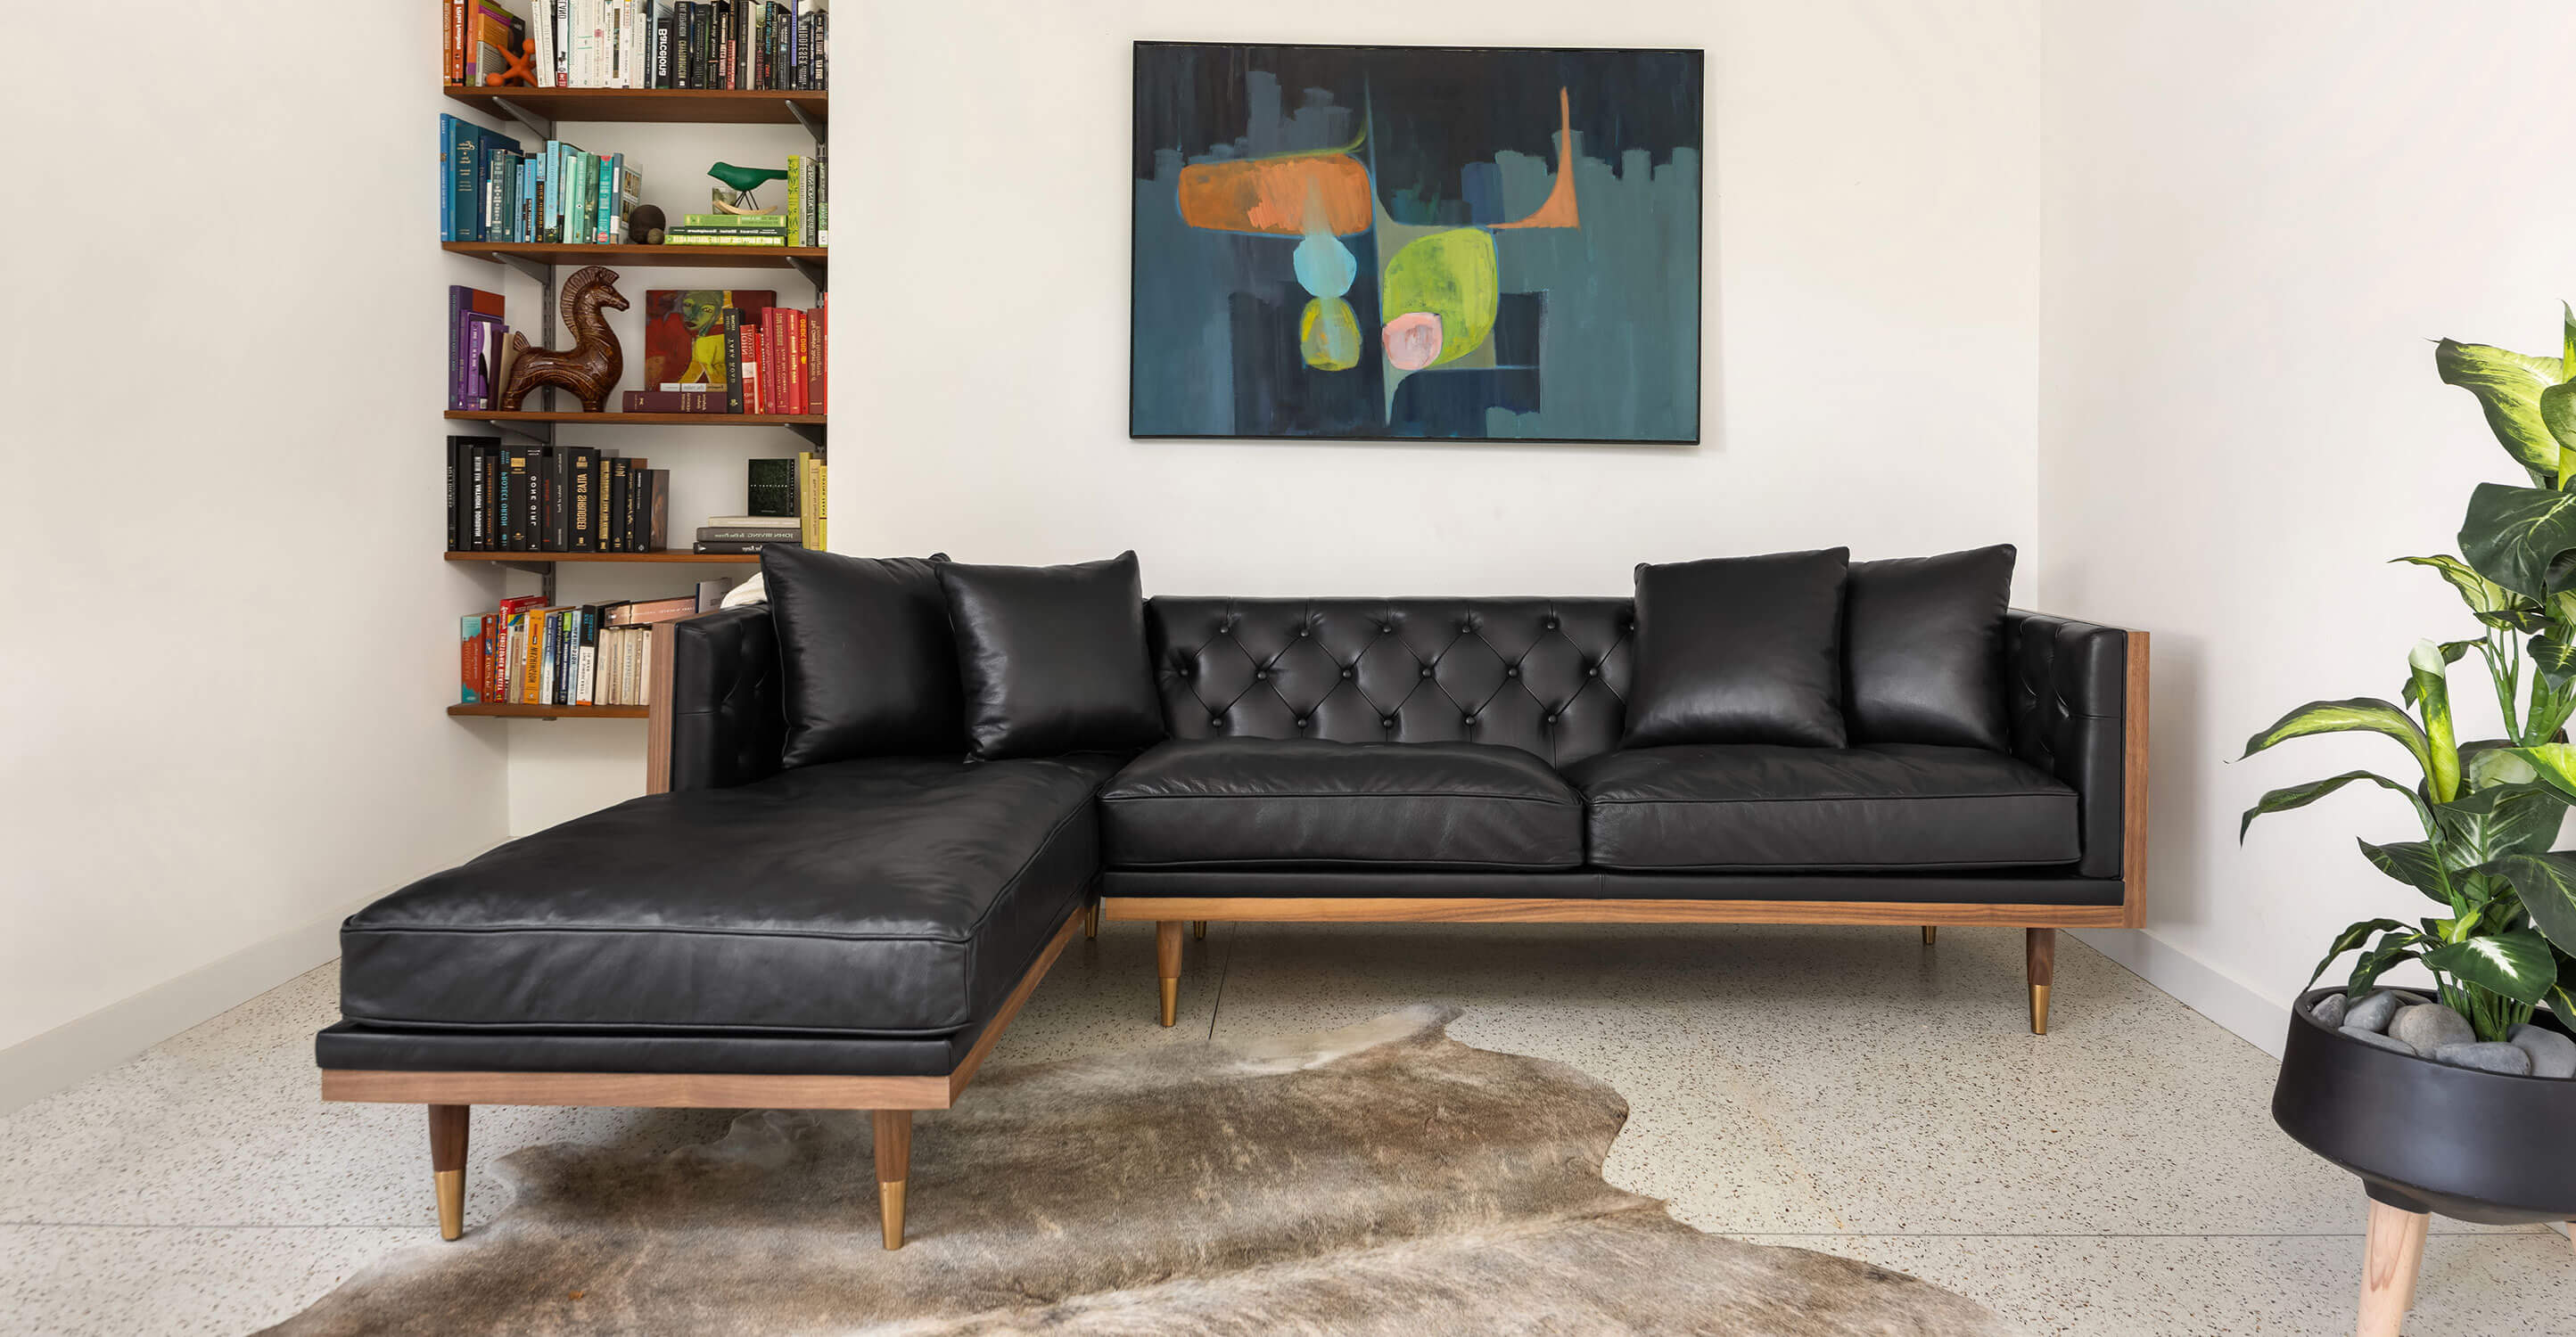 Kardiel Woodrow Midcentury Modern Box Sofa Sectional Left, White Aniline Leather/Walnut